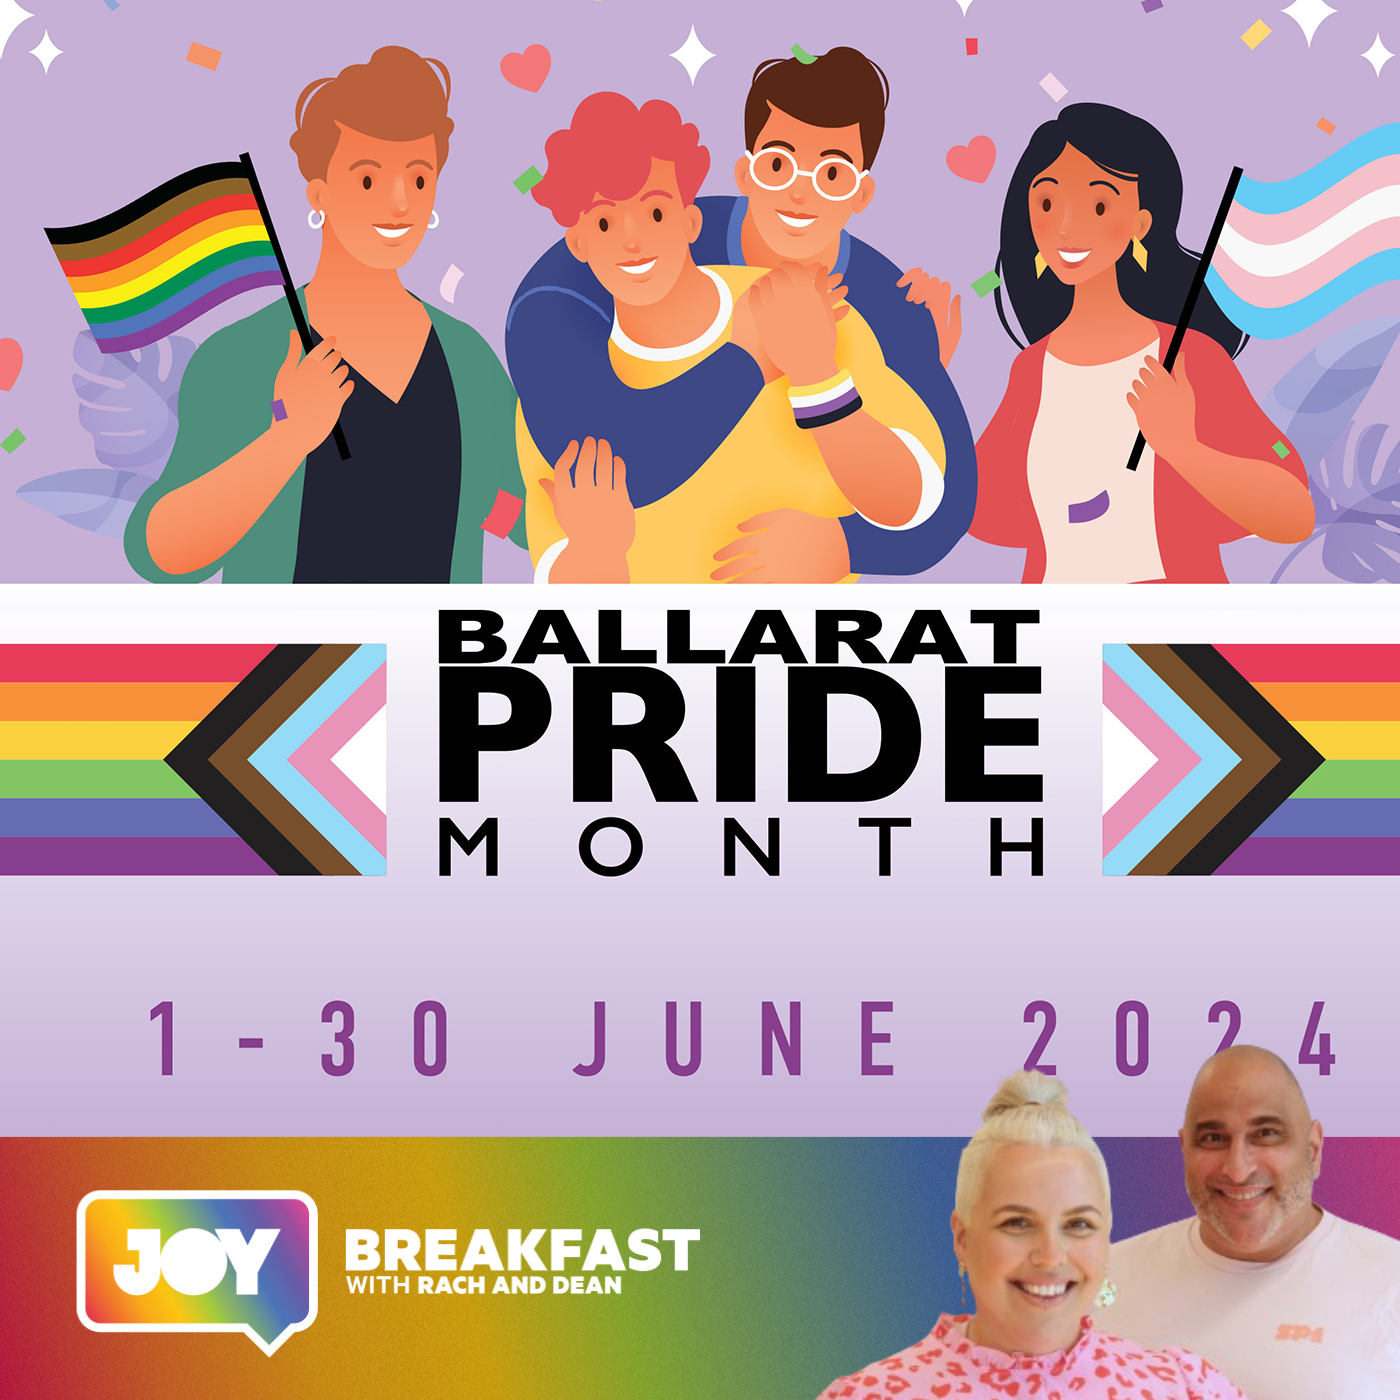 Ballarat Pride Month grows to 50 events